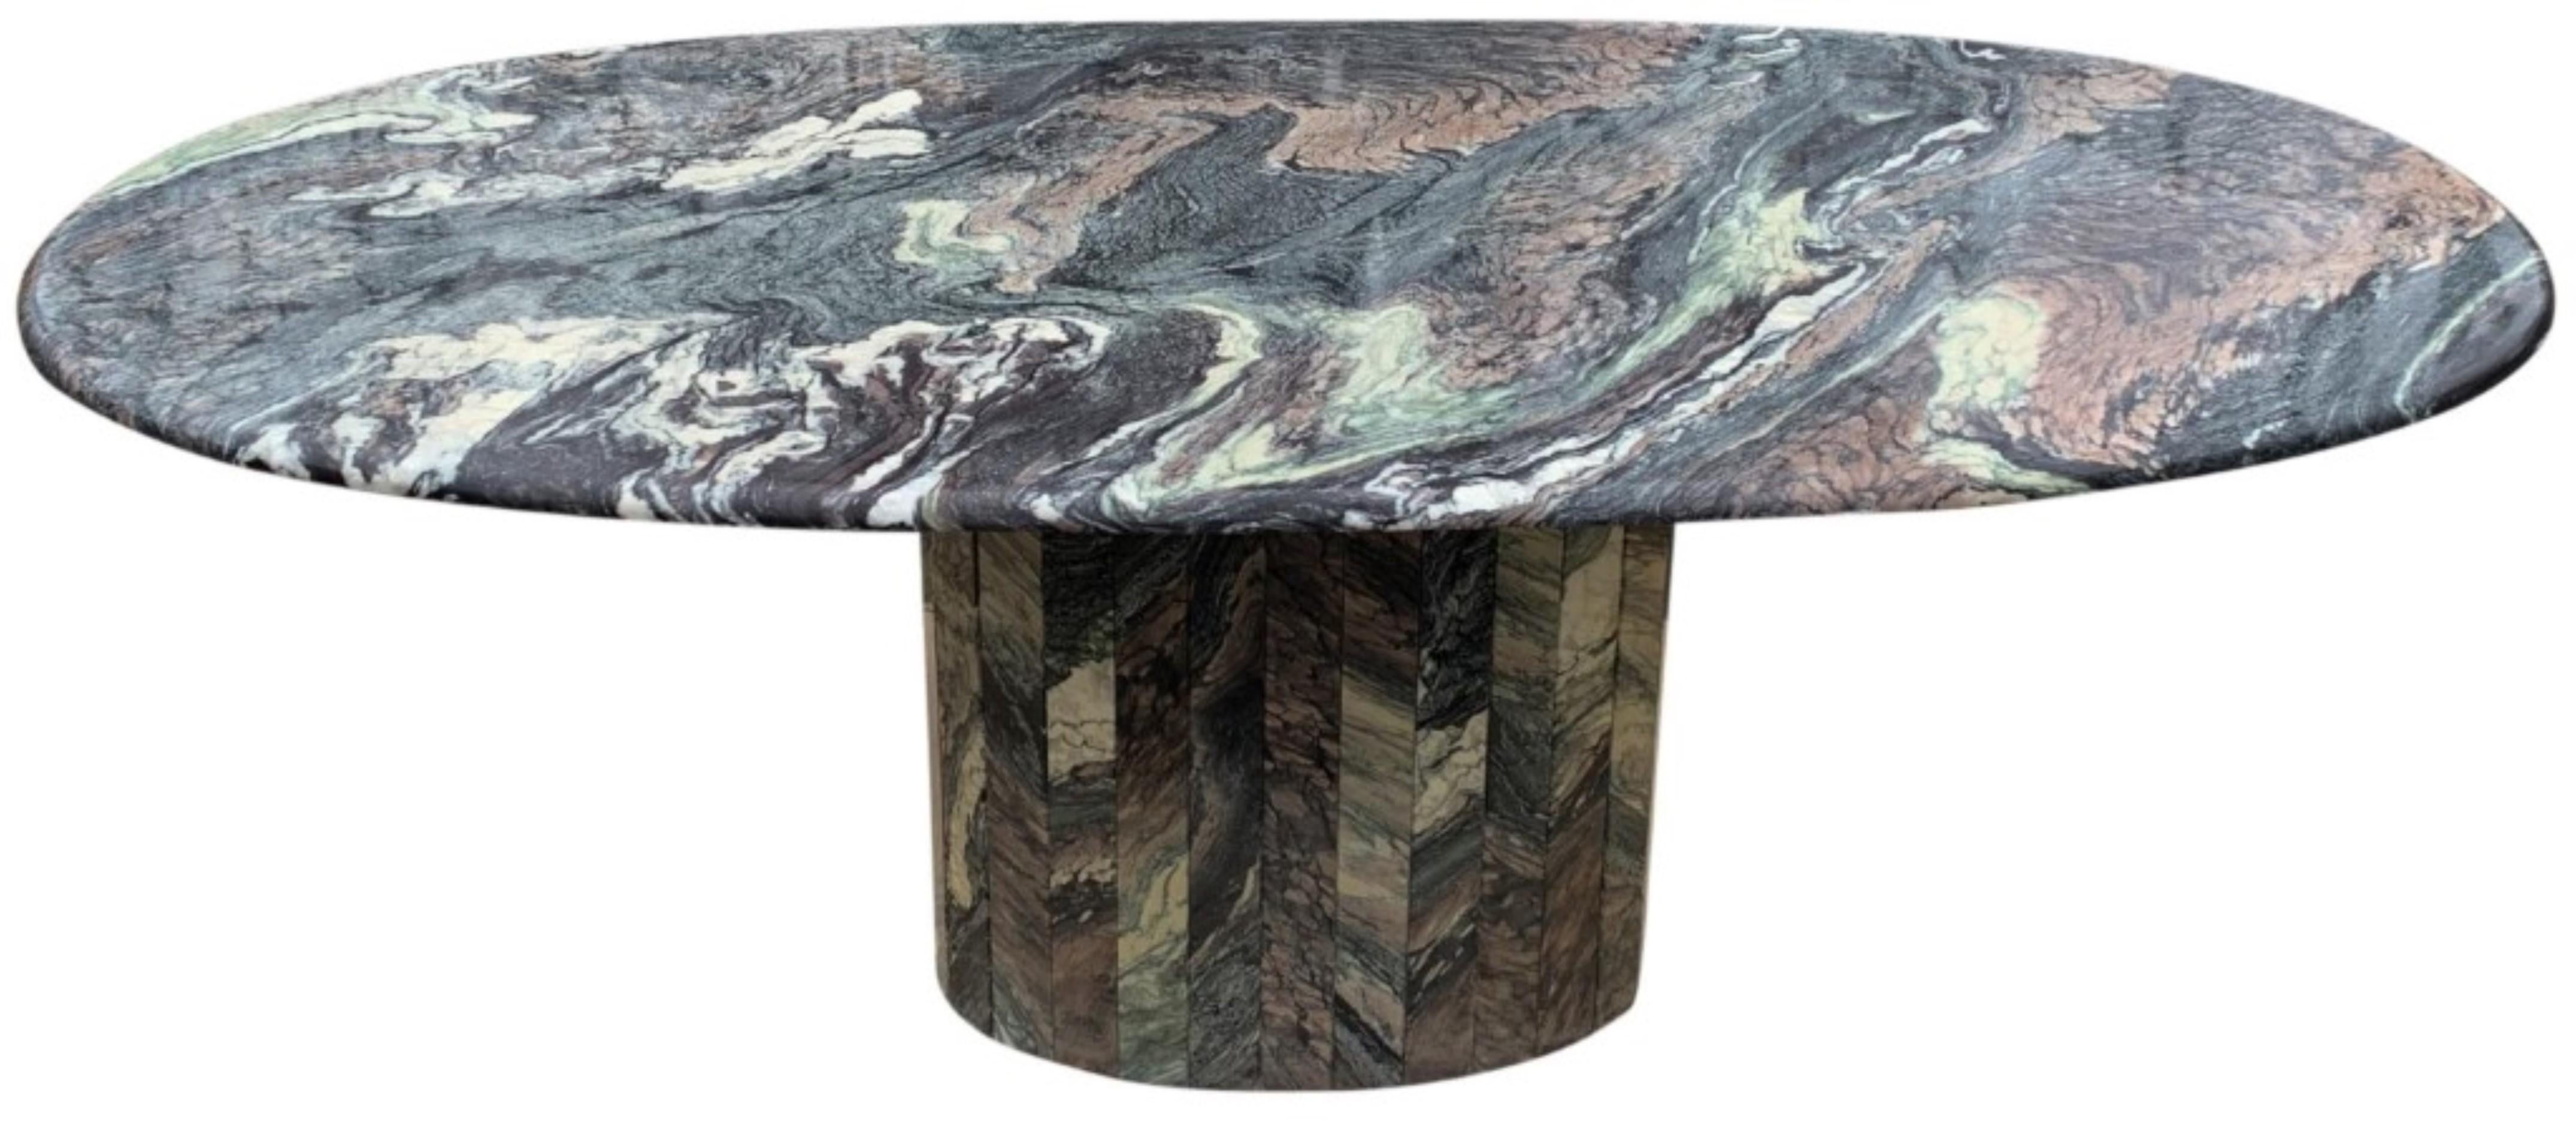 Late 20th Century Italian Post-Modern Dining Table Oval Top Exotic Cipollino Ondulato Marble